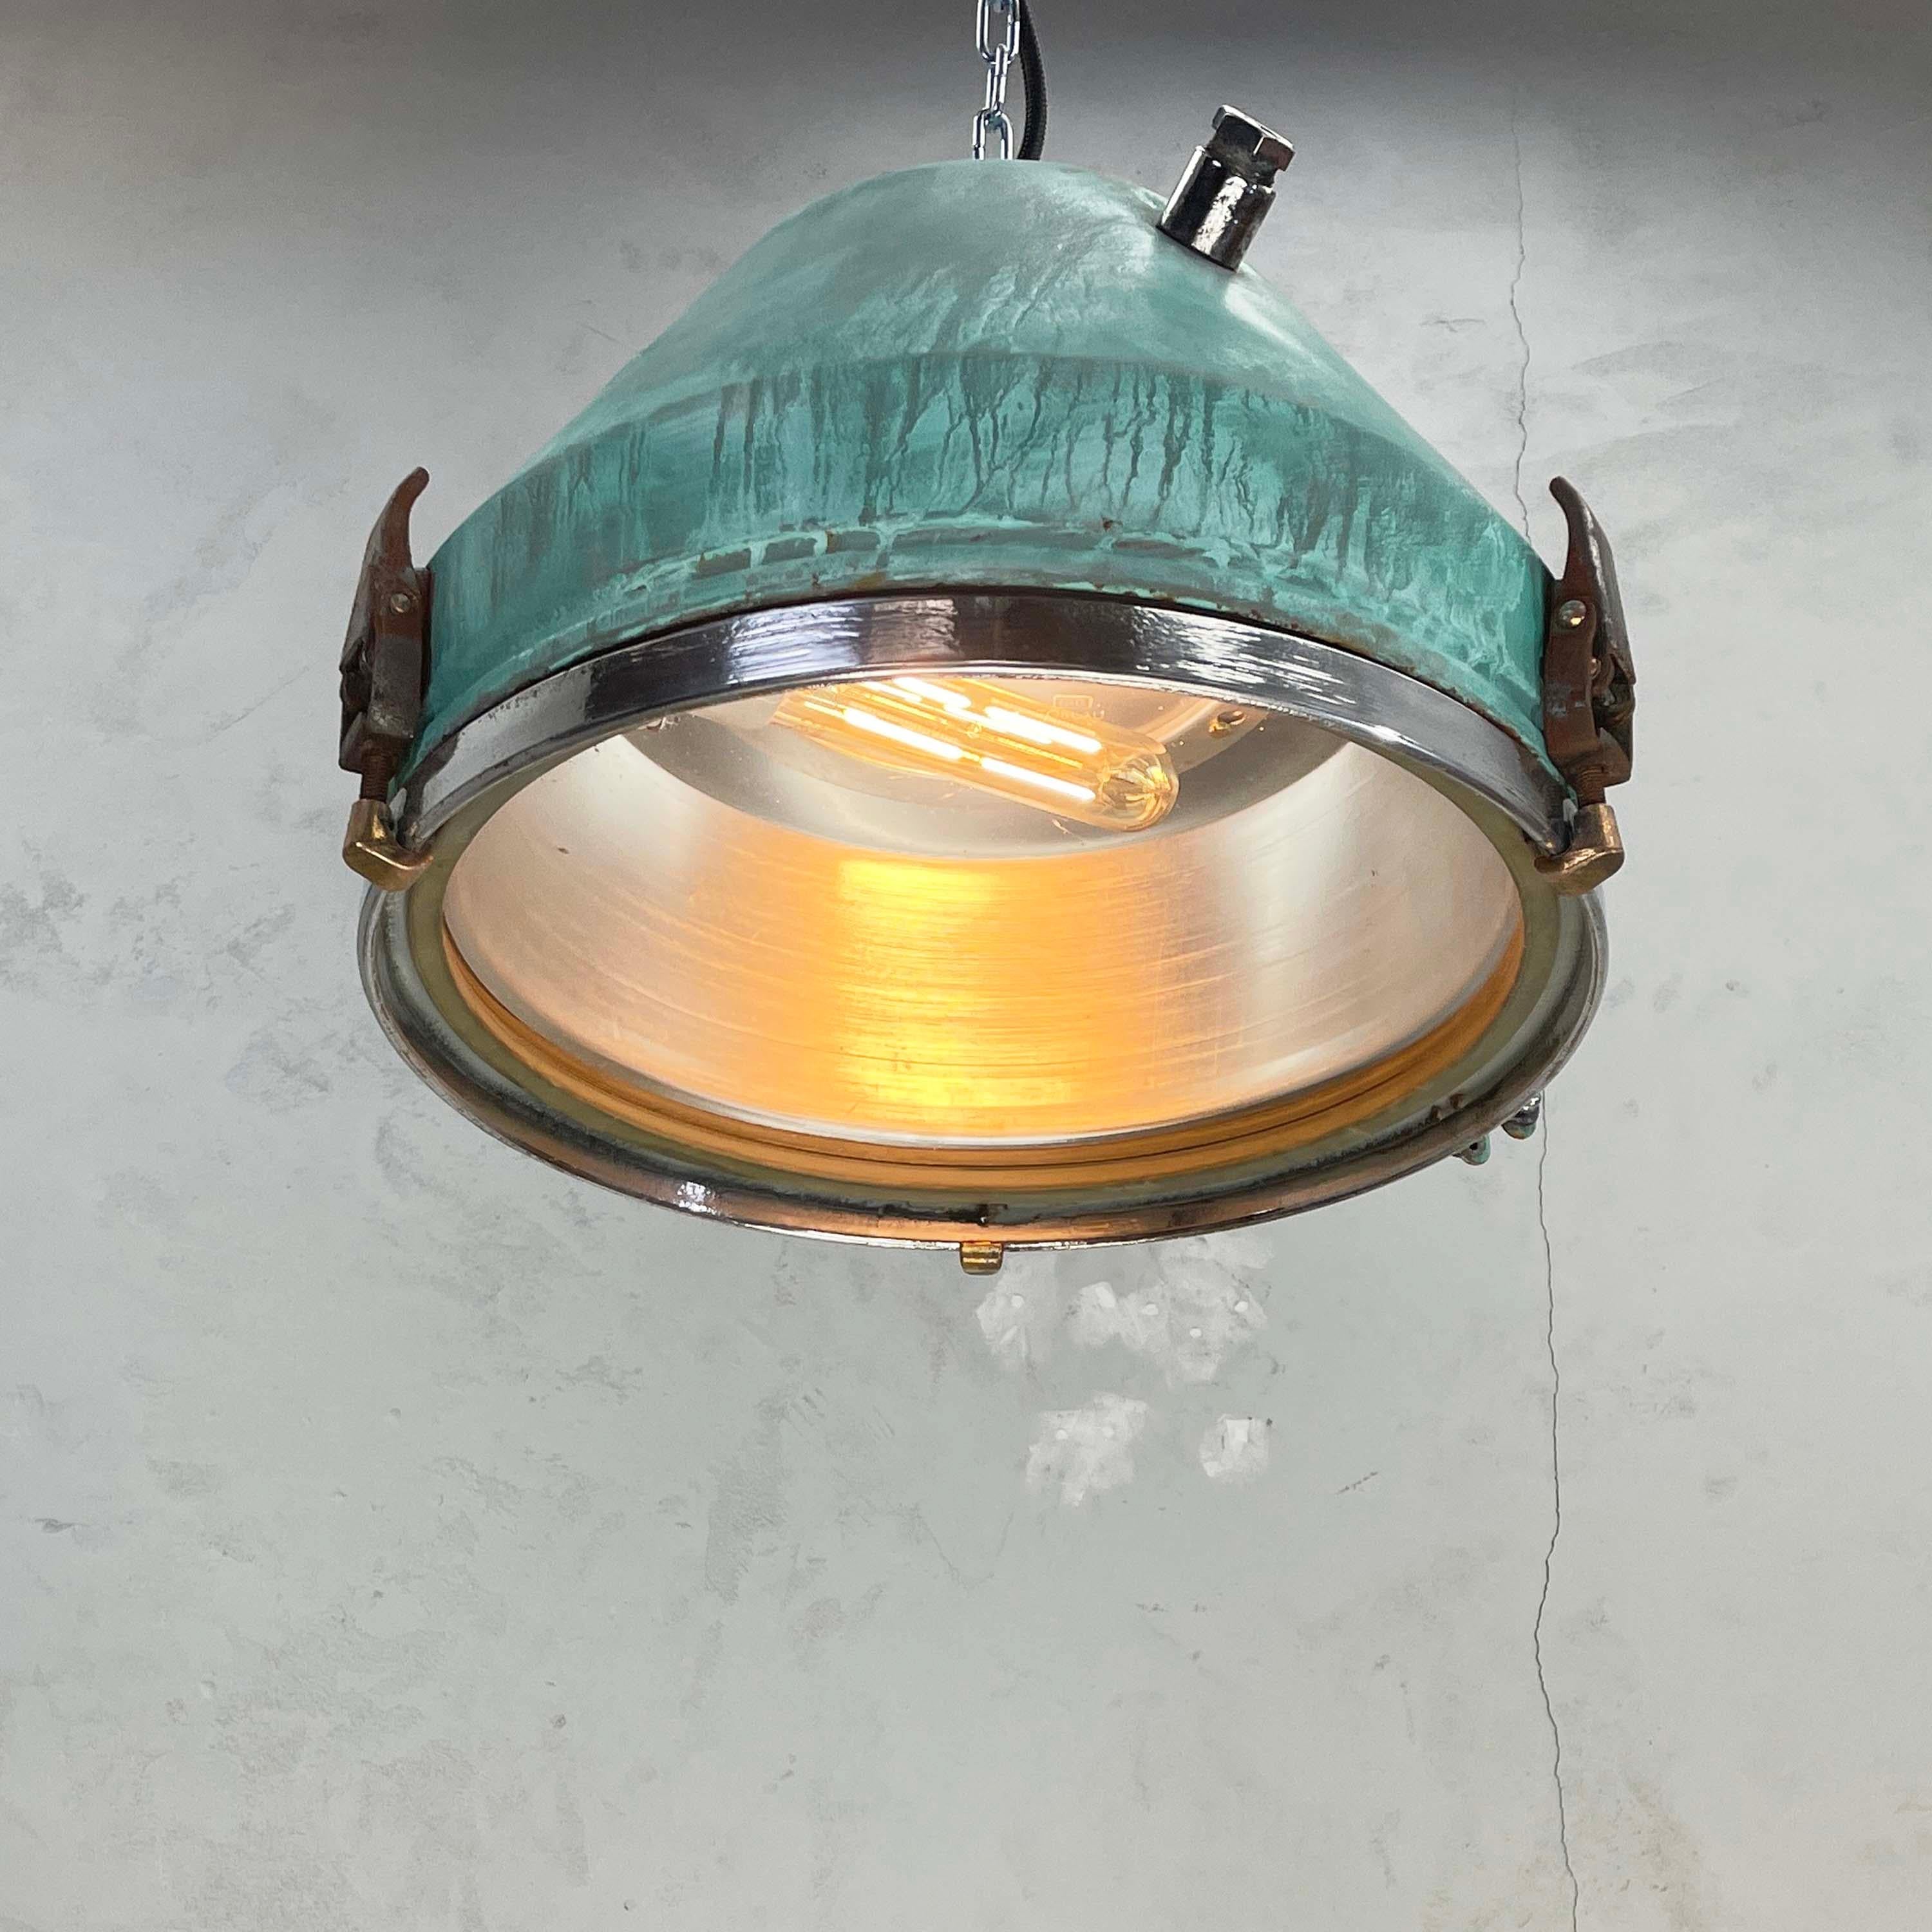 Late 20th Century 1970's German VEB Steel & Copper Verdigris Industrial Pendant Lamp, Teal Finish For Sale